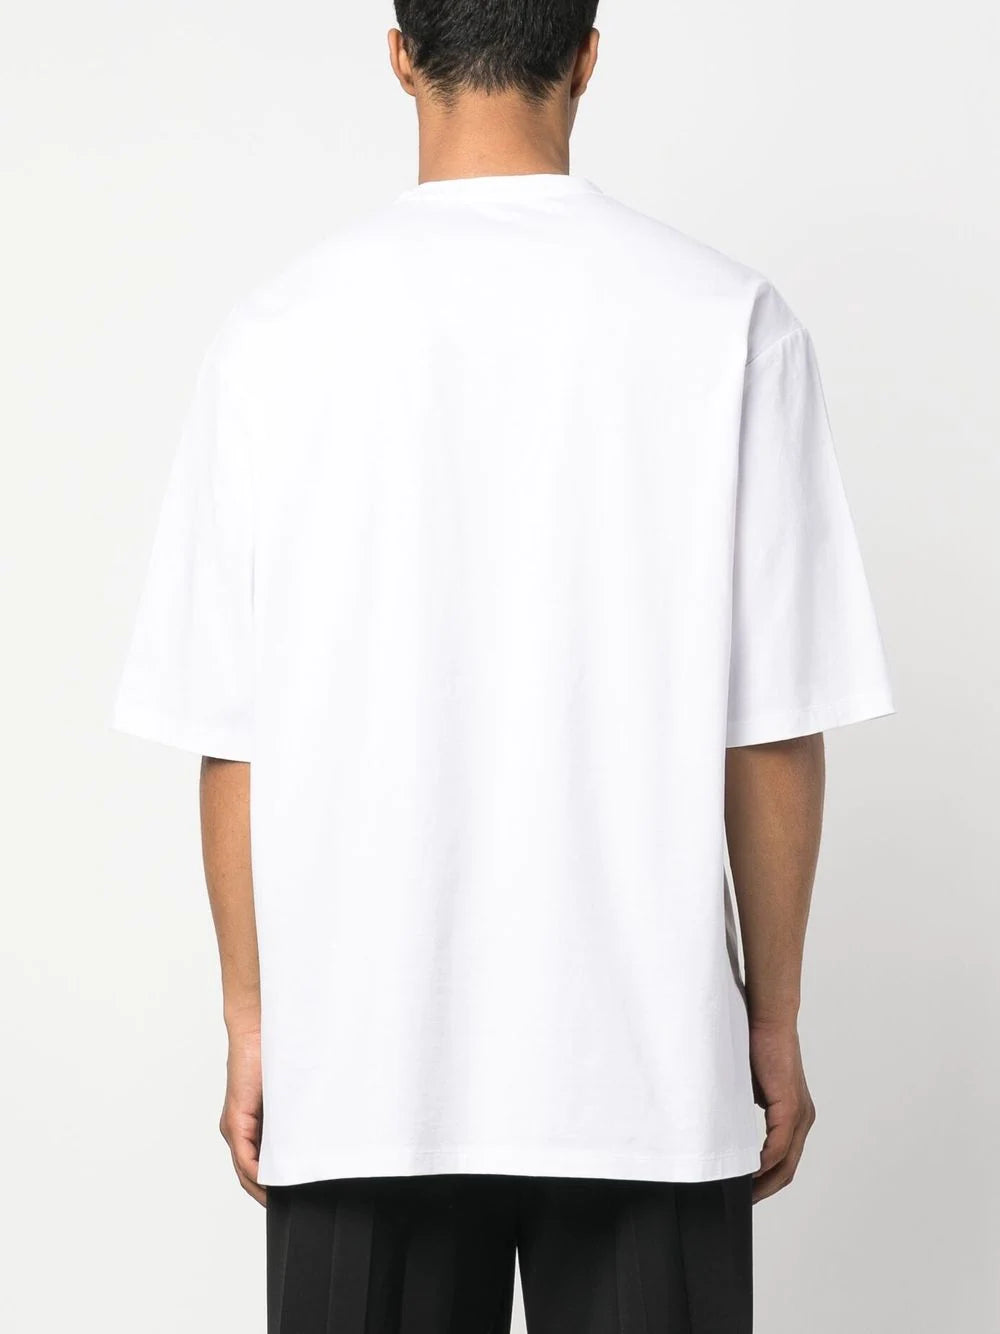 BALMAIN MEN Loose Fit Crystal Logo SS Oversized T-Shirt White/Black - MAISONDEFASHION.COM